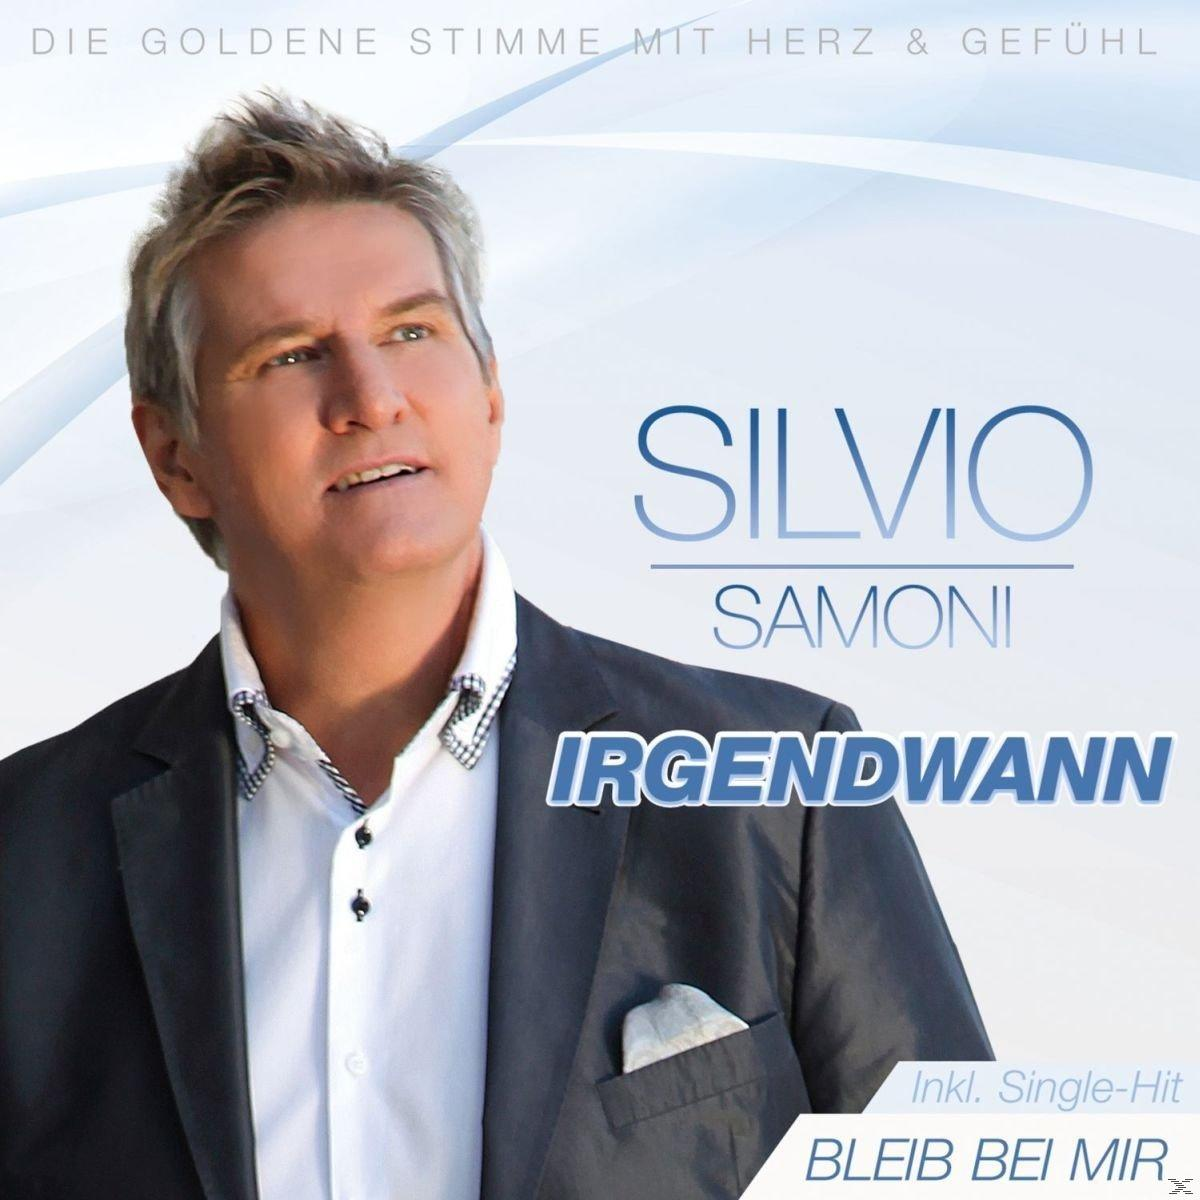 Silvio - Irgendwann - (CD) Samoni